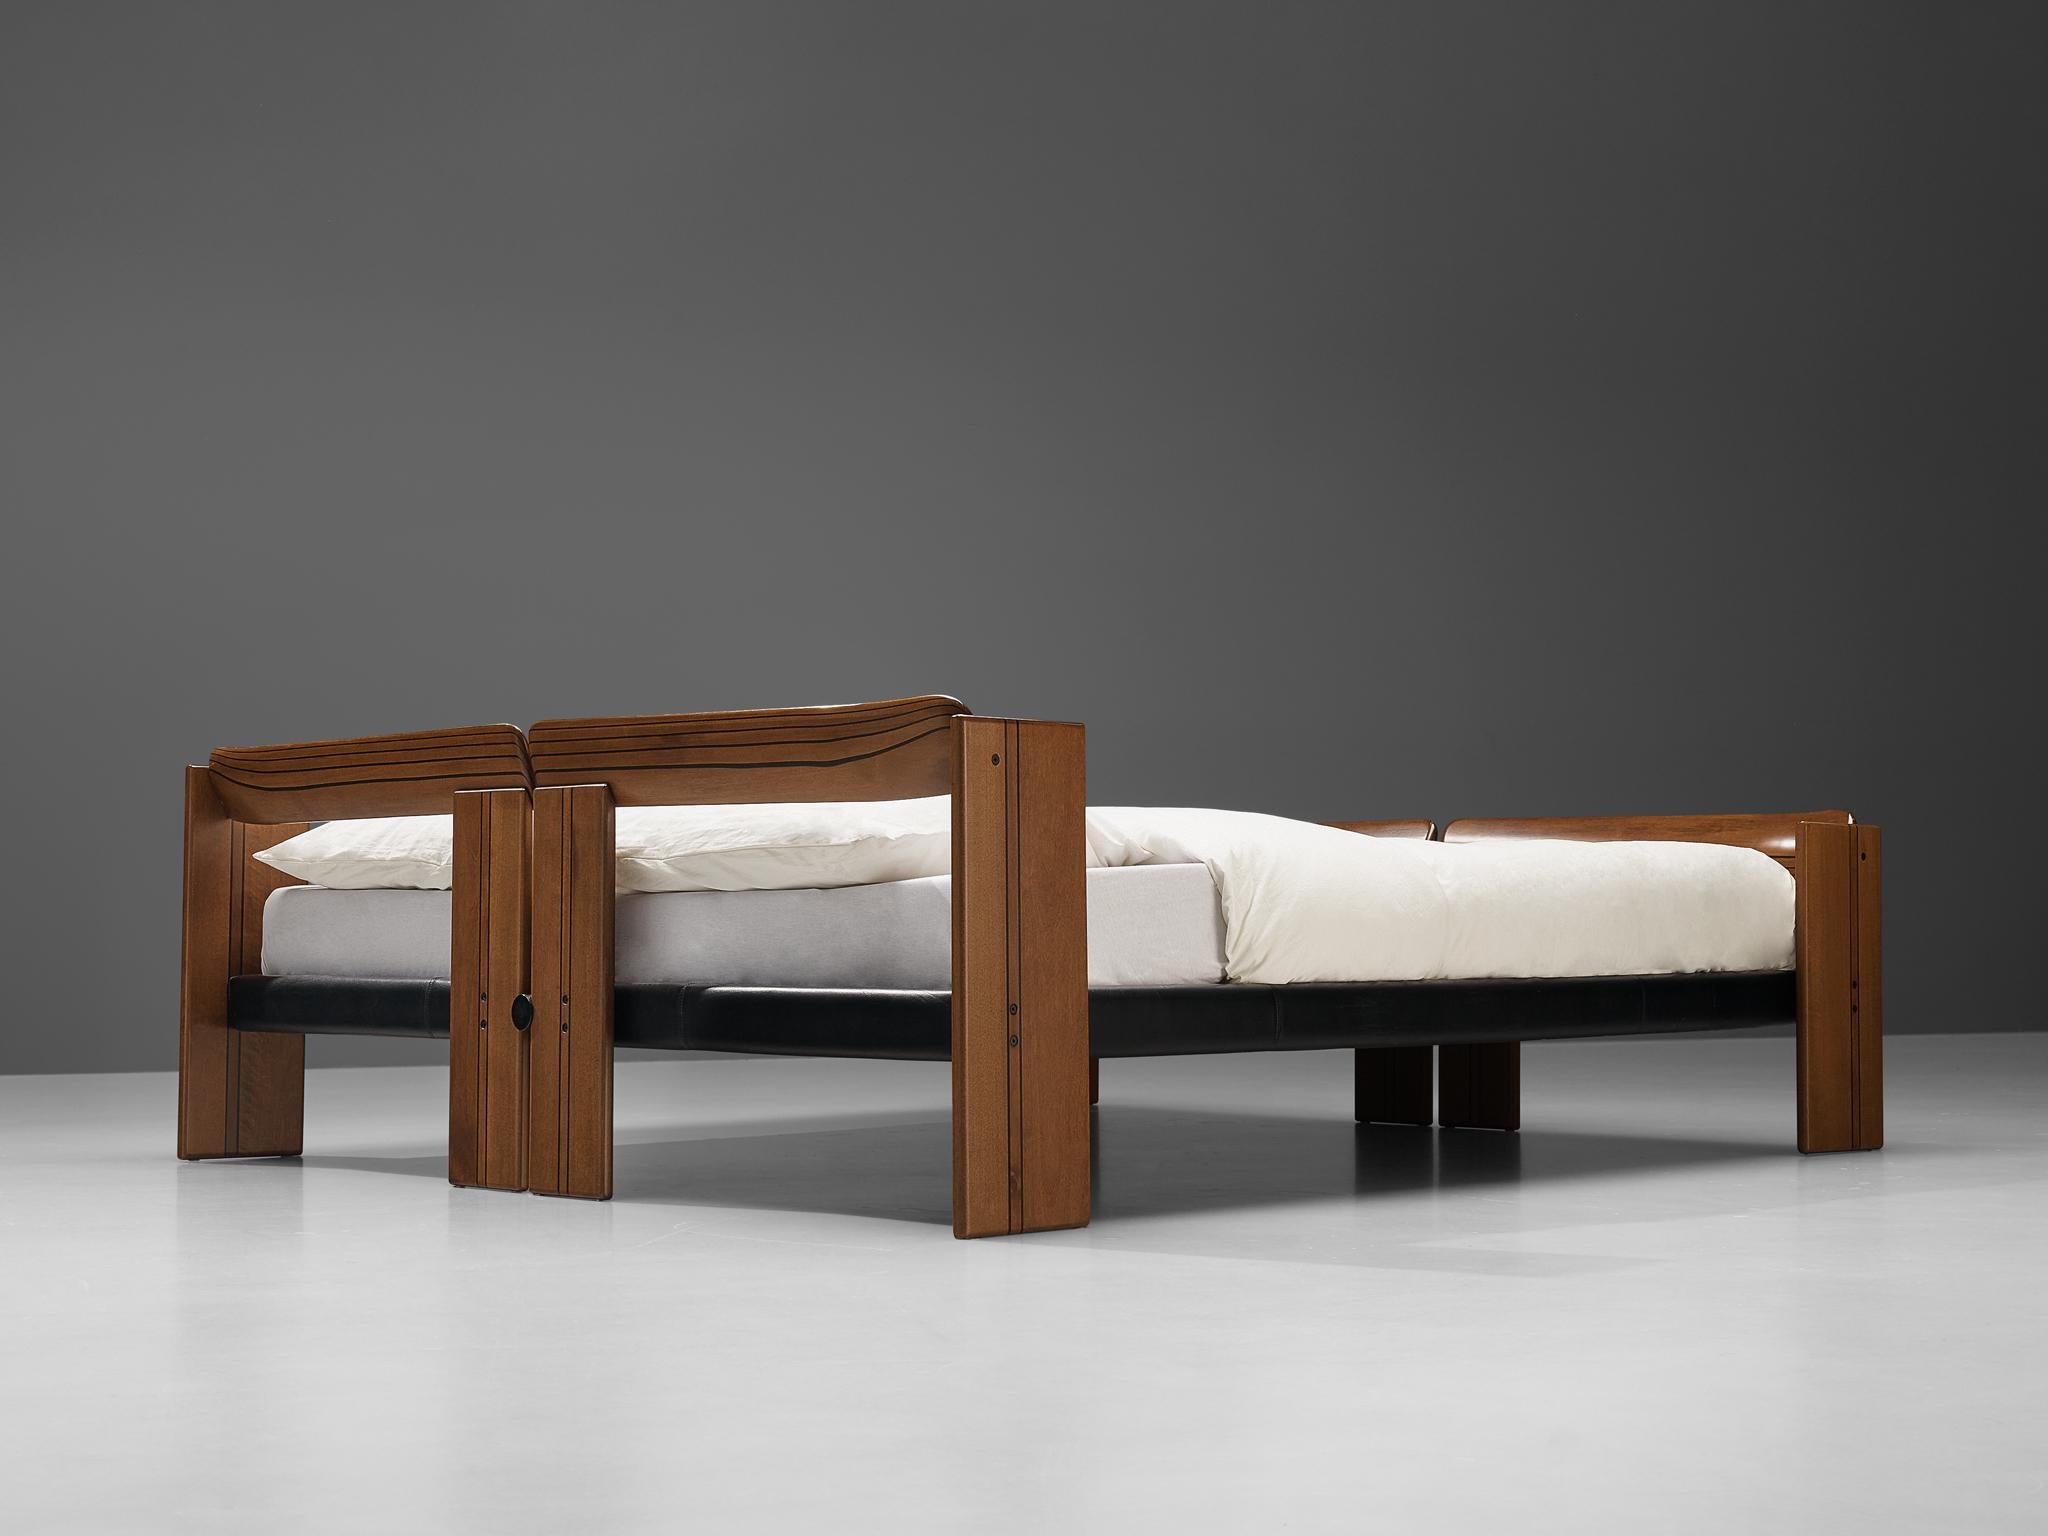 Afra & Tobia Scarpa 'Artona' Double Bed with Nightstands 1